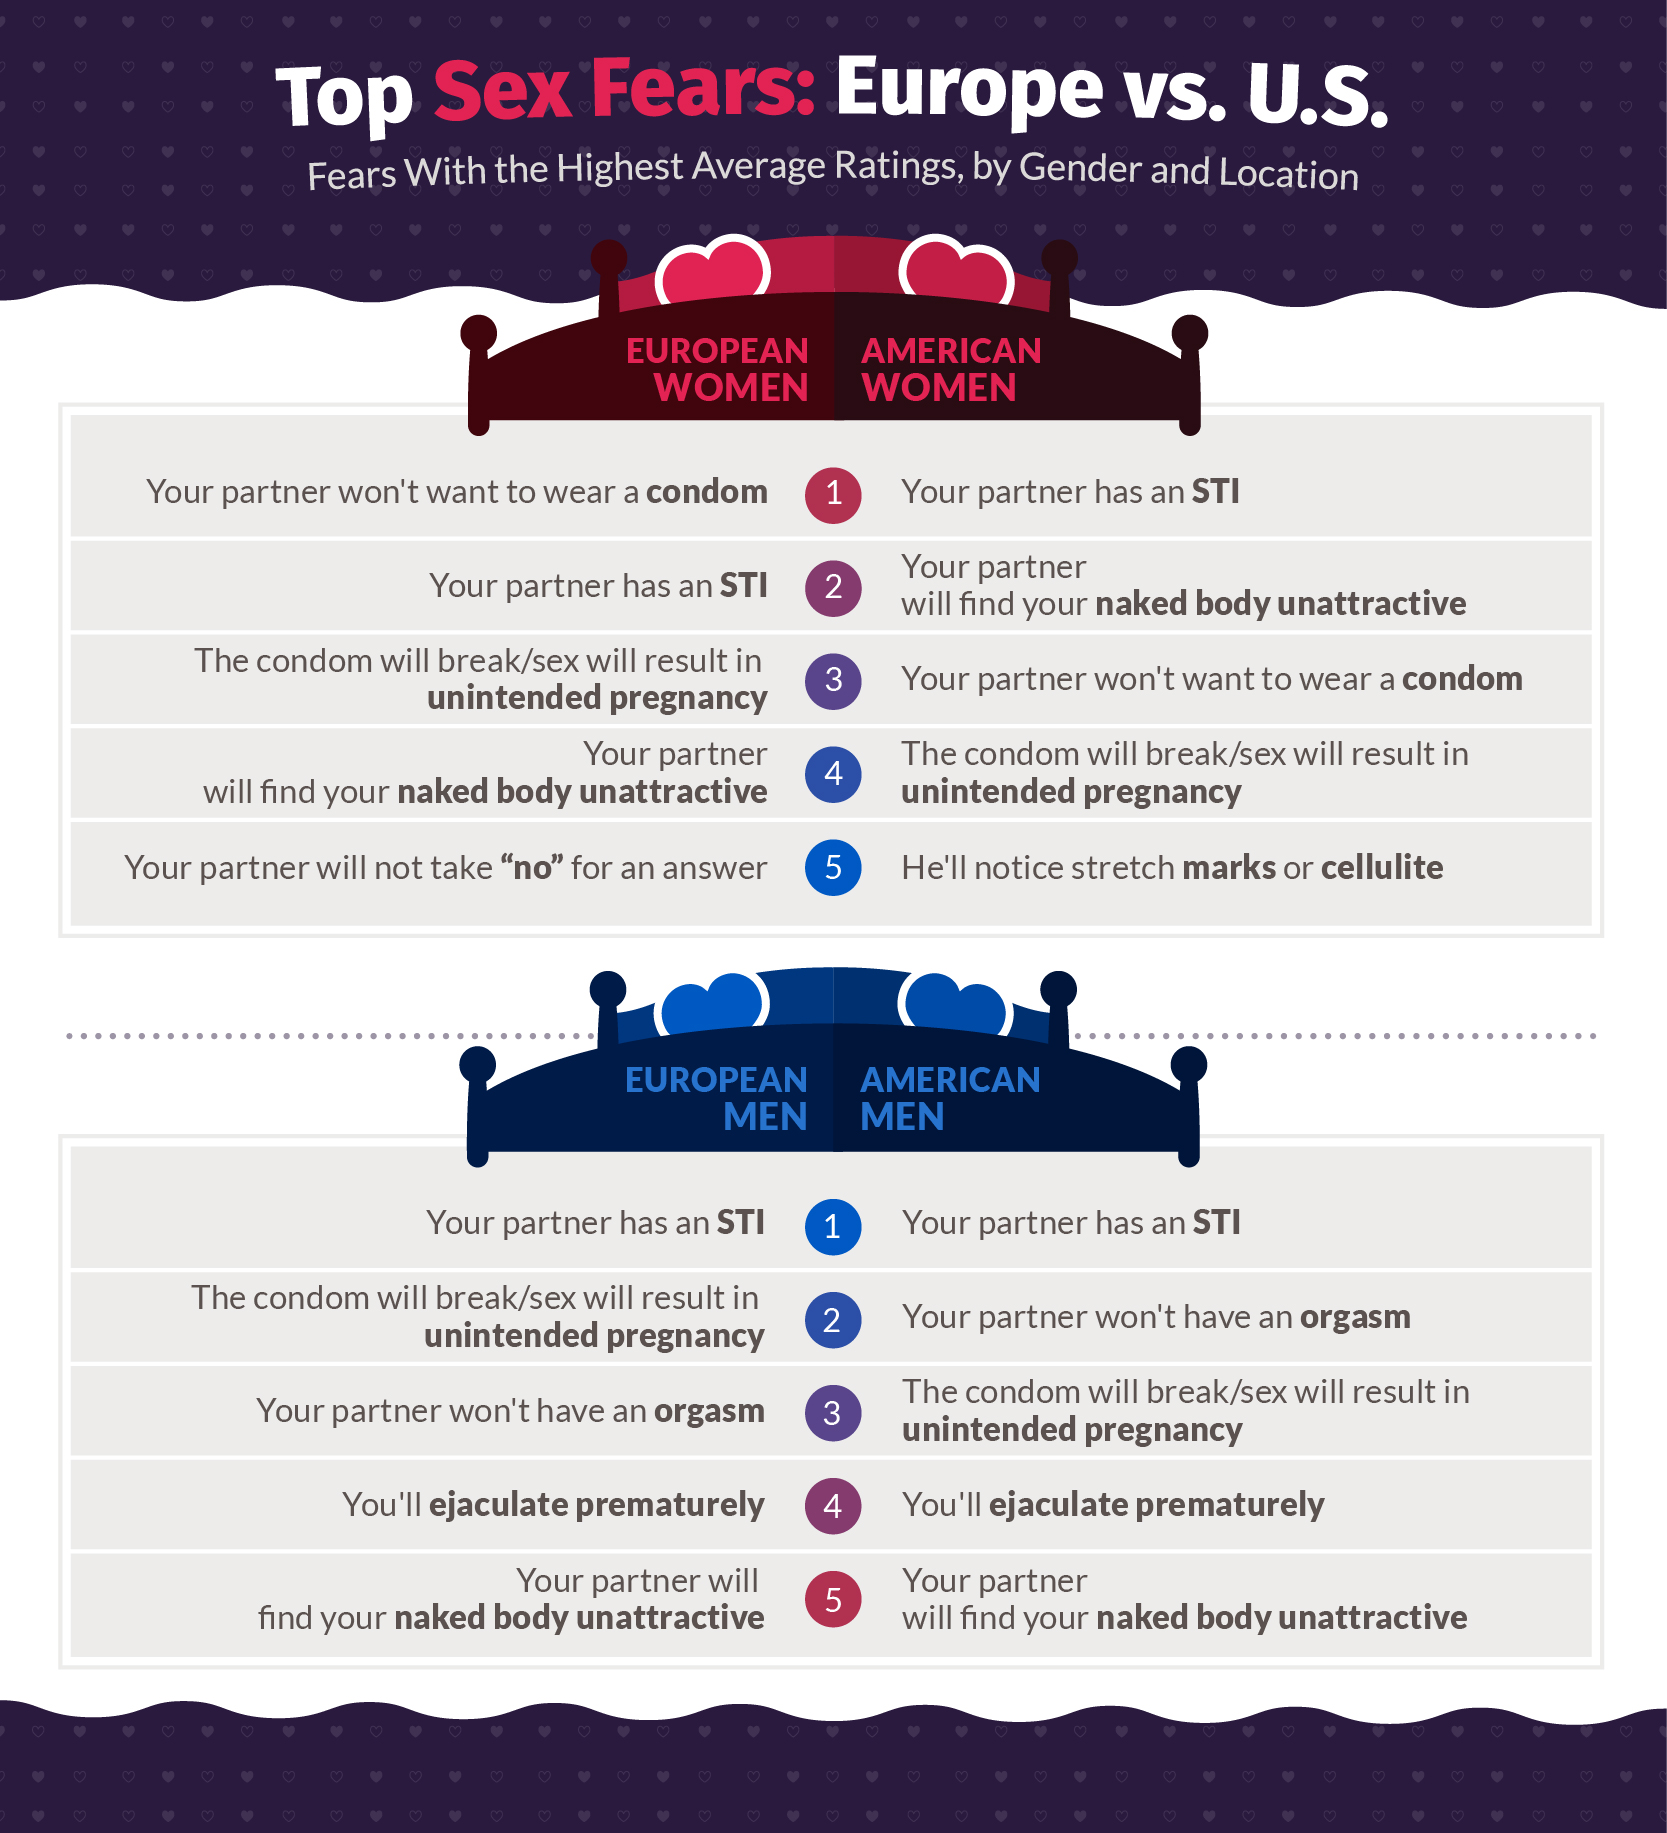 Top Sex Fears: Europe vs. U.S.